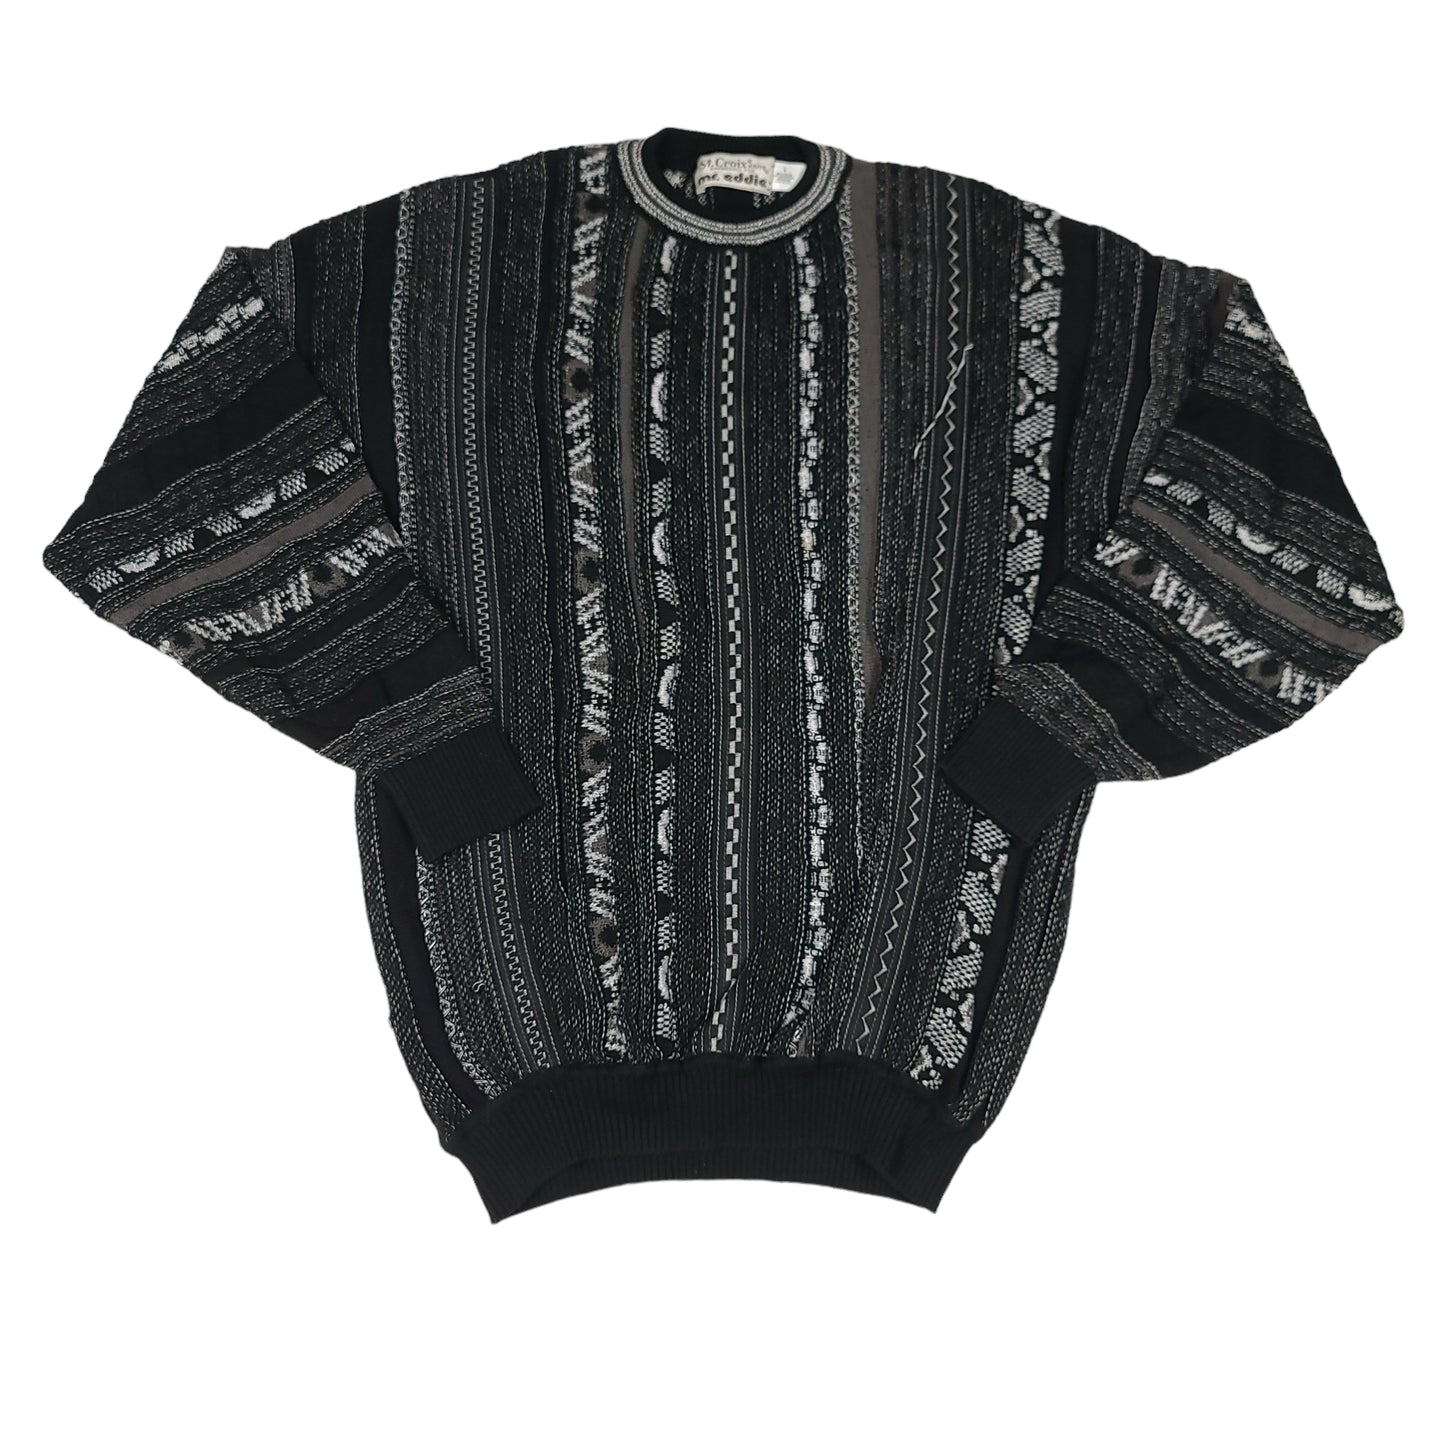 St. Croix Knits Black & White Coogi Style Sweater